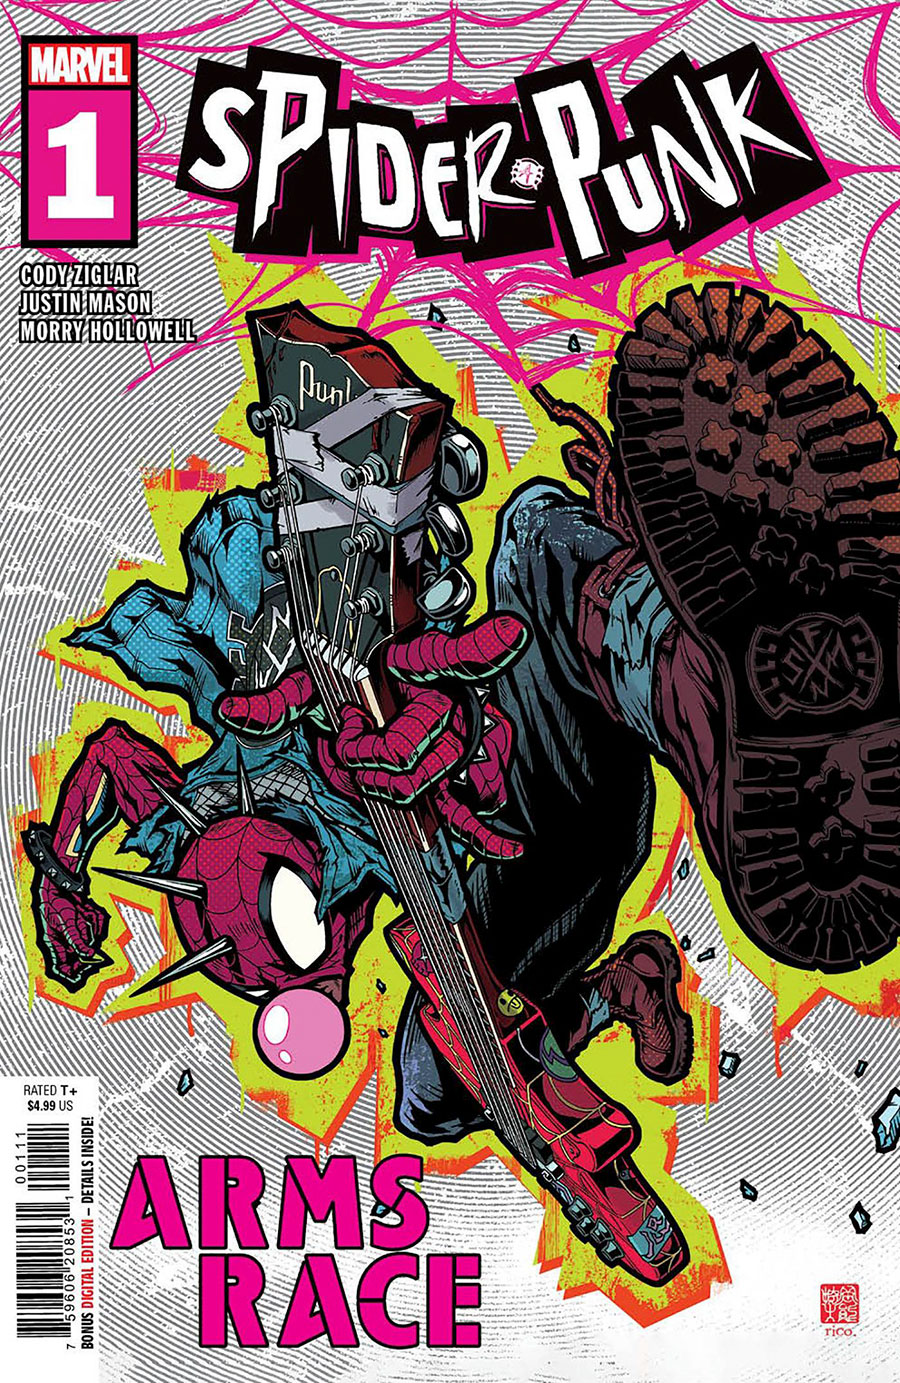 Spider-Punk Arms Race #1 Cover A Regular Takashi Okazaki Cover